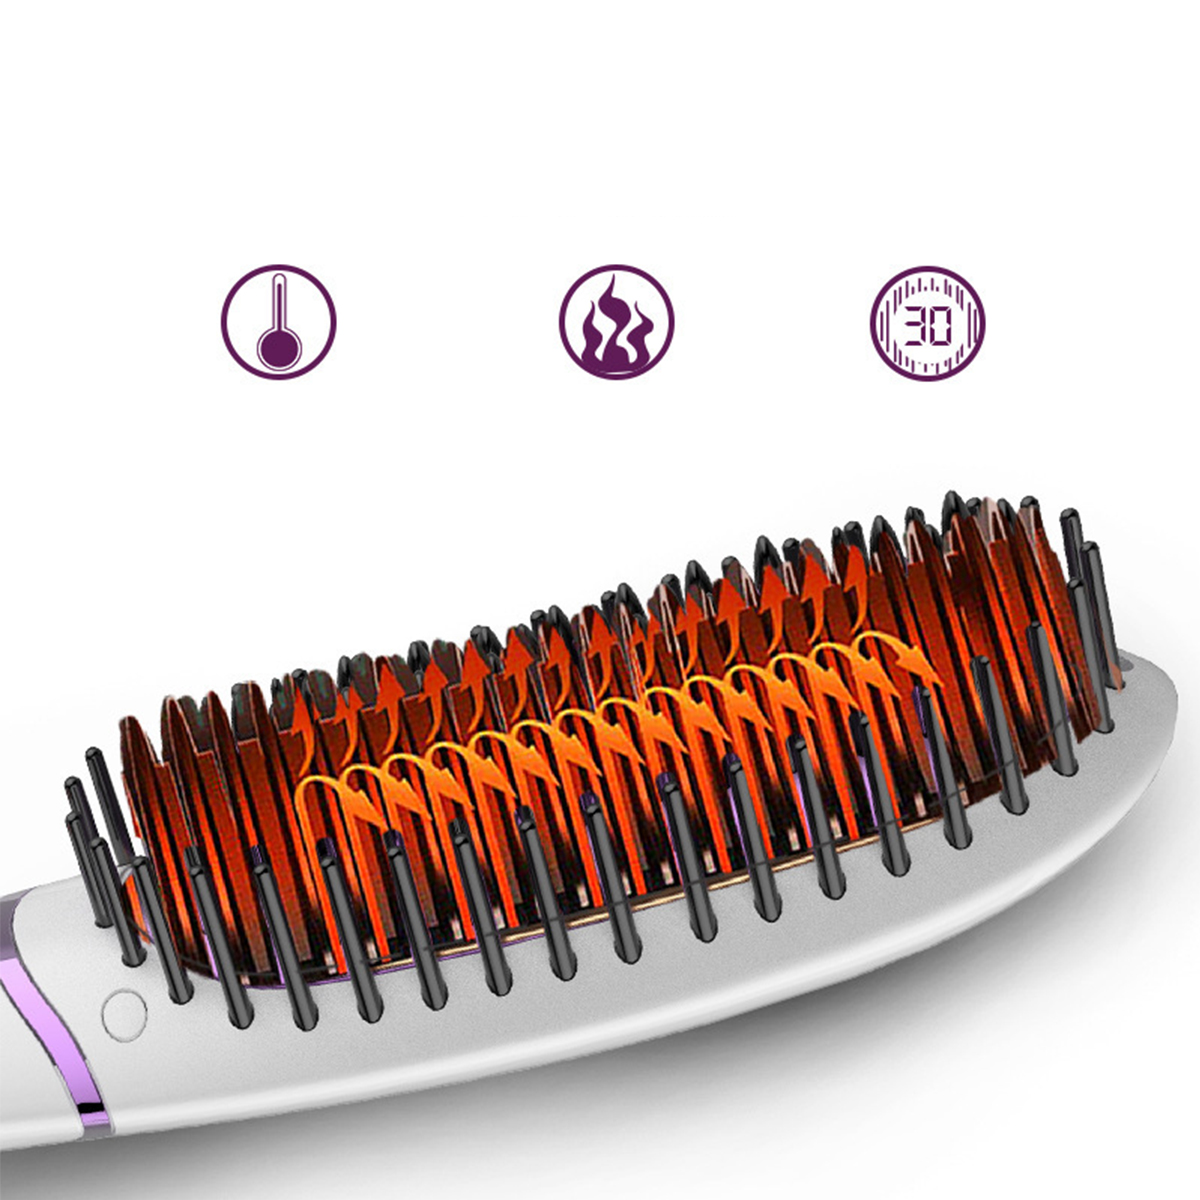 SHAOKE Mini LED-Haarglätter mit Ionentechnologie 3D-Zähnen und 5 Glätteisen, Temperaturstufen